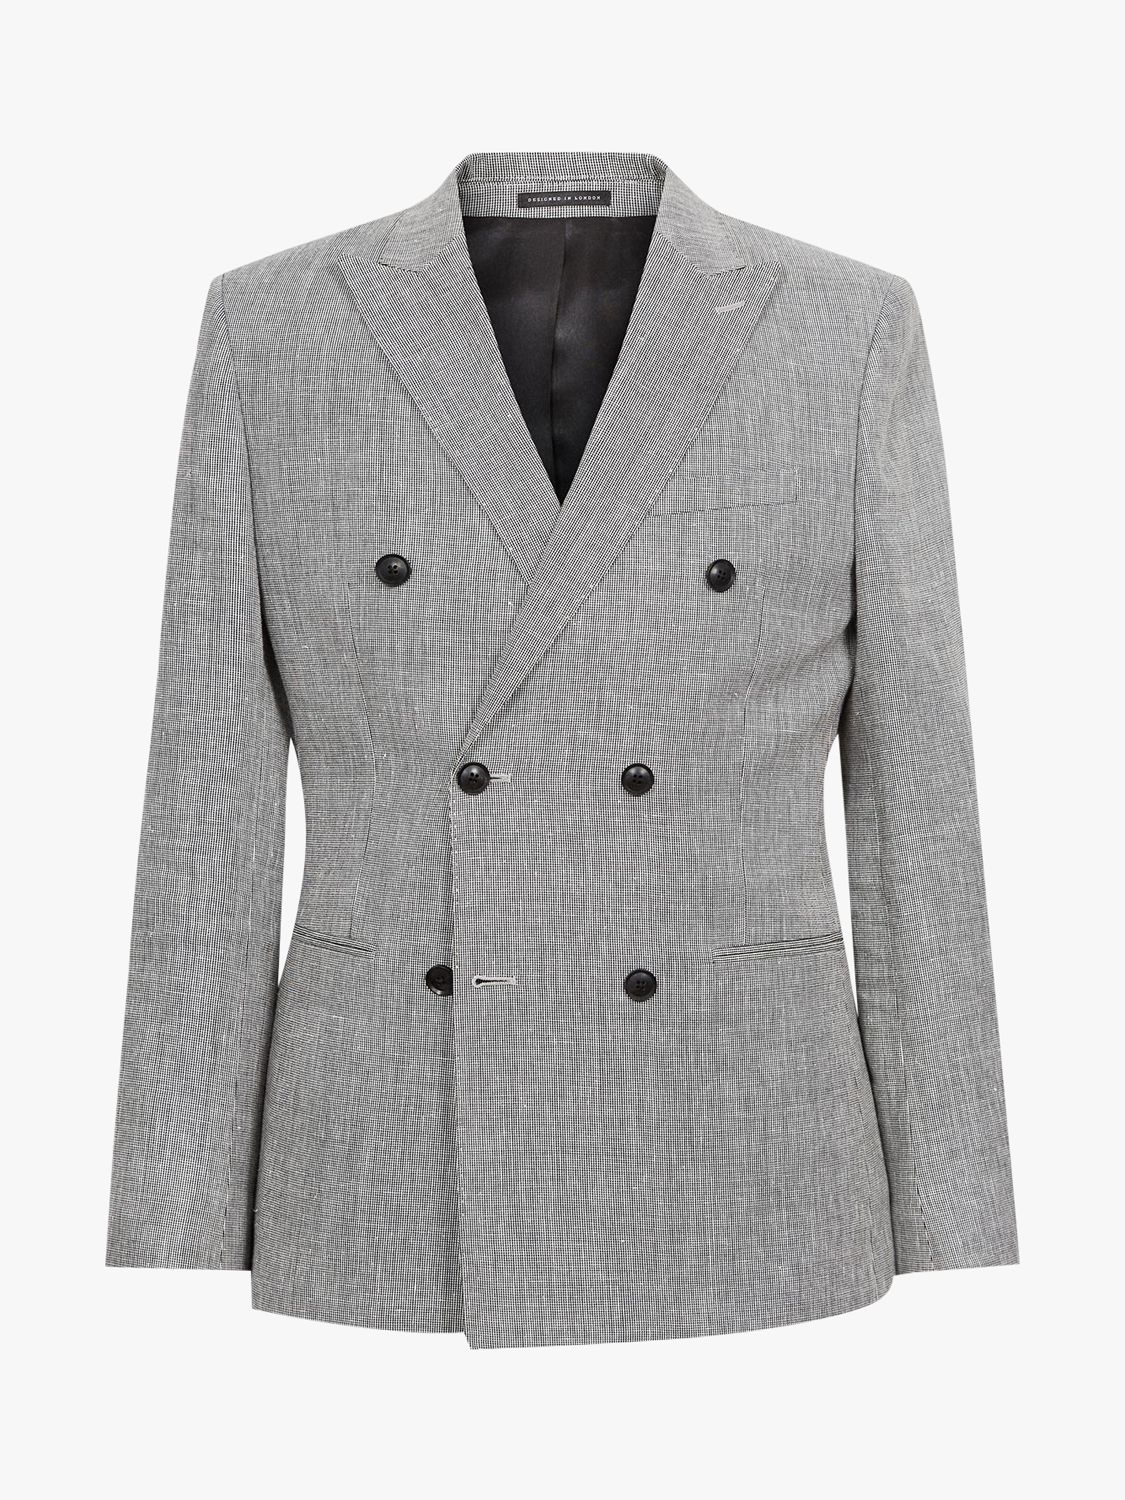 Reiss Cab Puppytooth Linen Wool Blend Suit Jacket, Grey at John Lewis ...